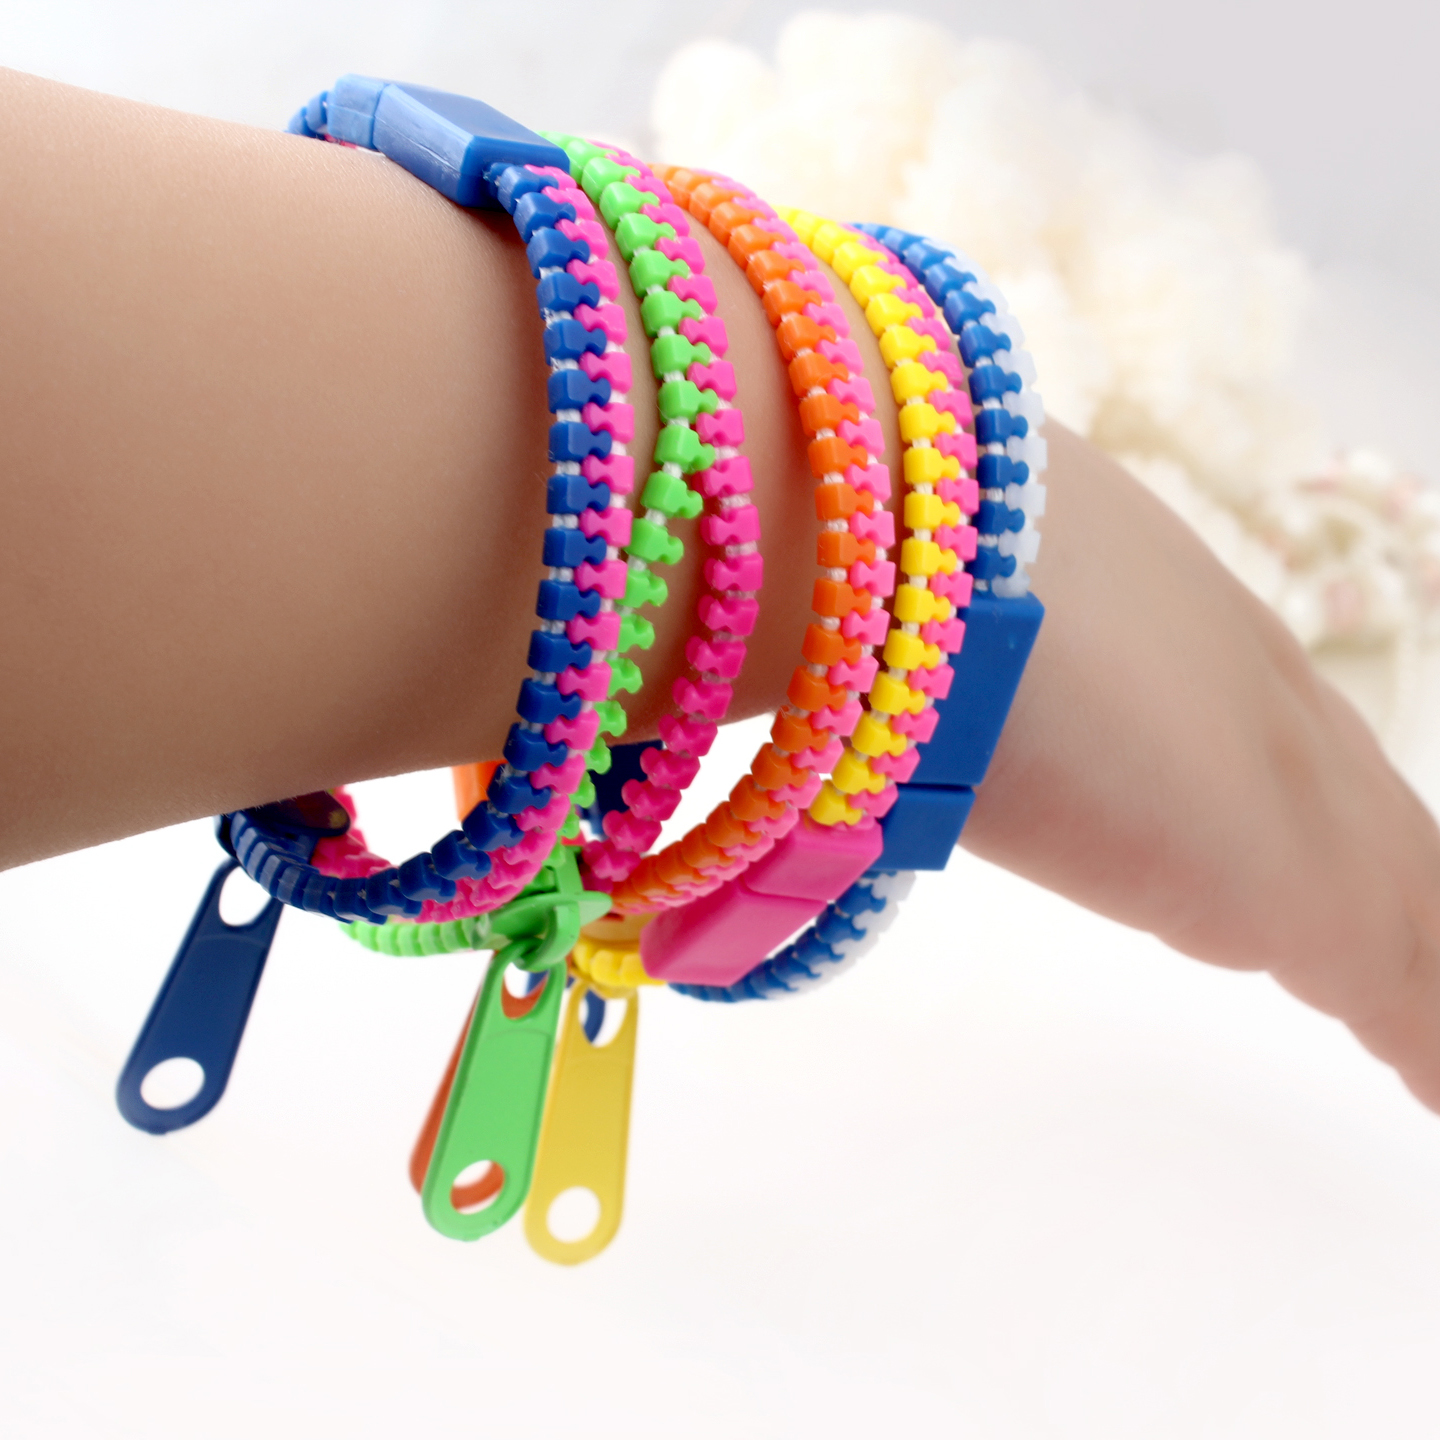 

Creative Toy for Kids Children Adhd Autism Hand Sensory Stress Reliever Focus Fidget Zipper Bracelet